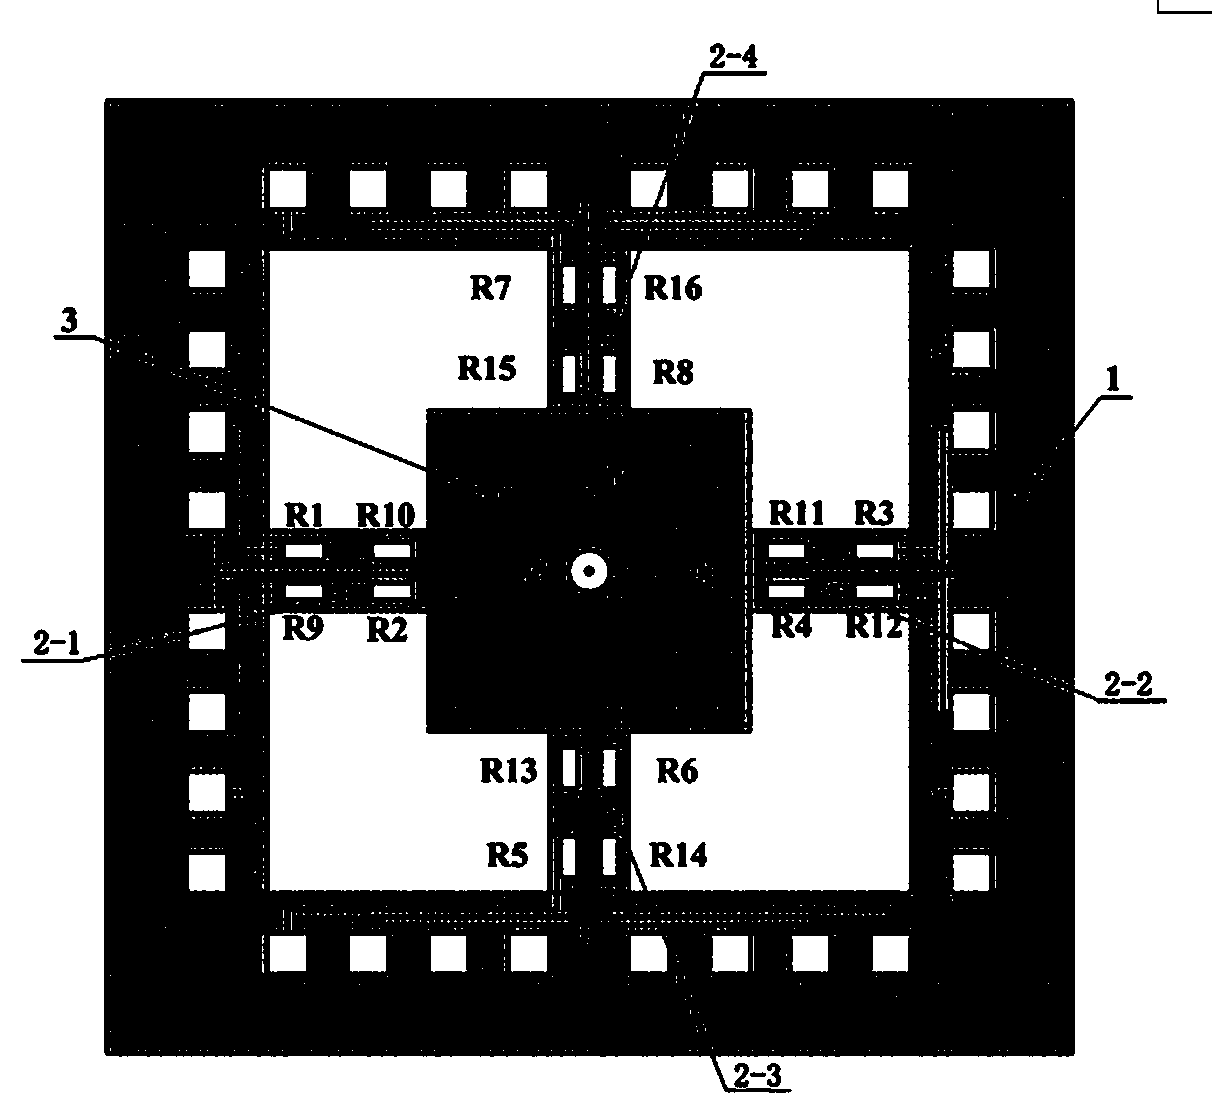 Piezoresistive monolithic integrated four-beam tri-axial accelerometer